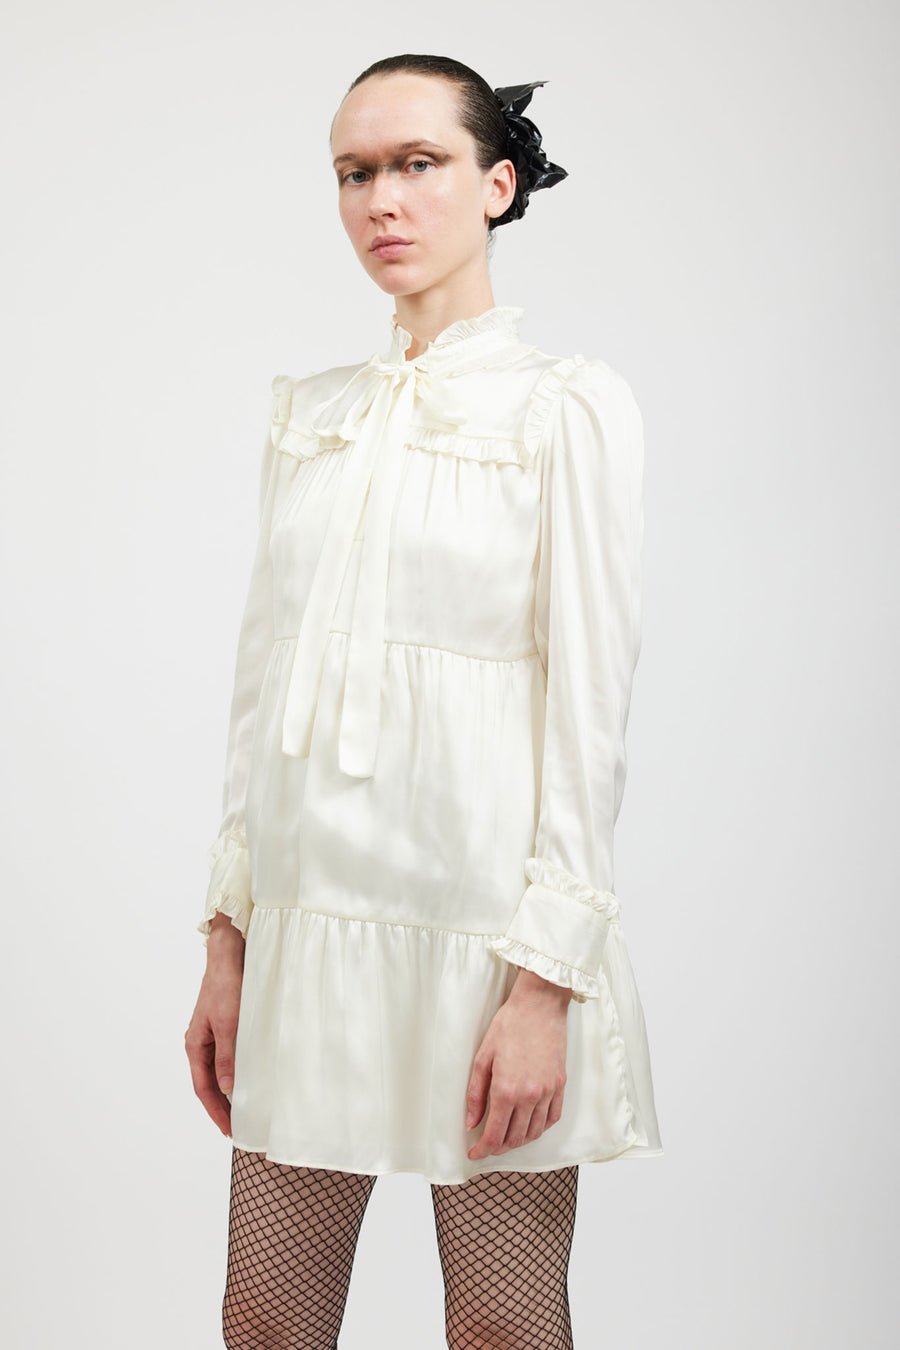 BATSHEVA - Mina Dress in Cream Satin